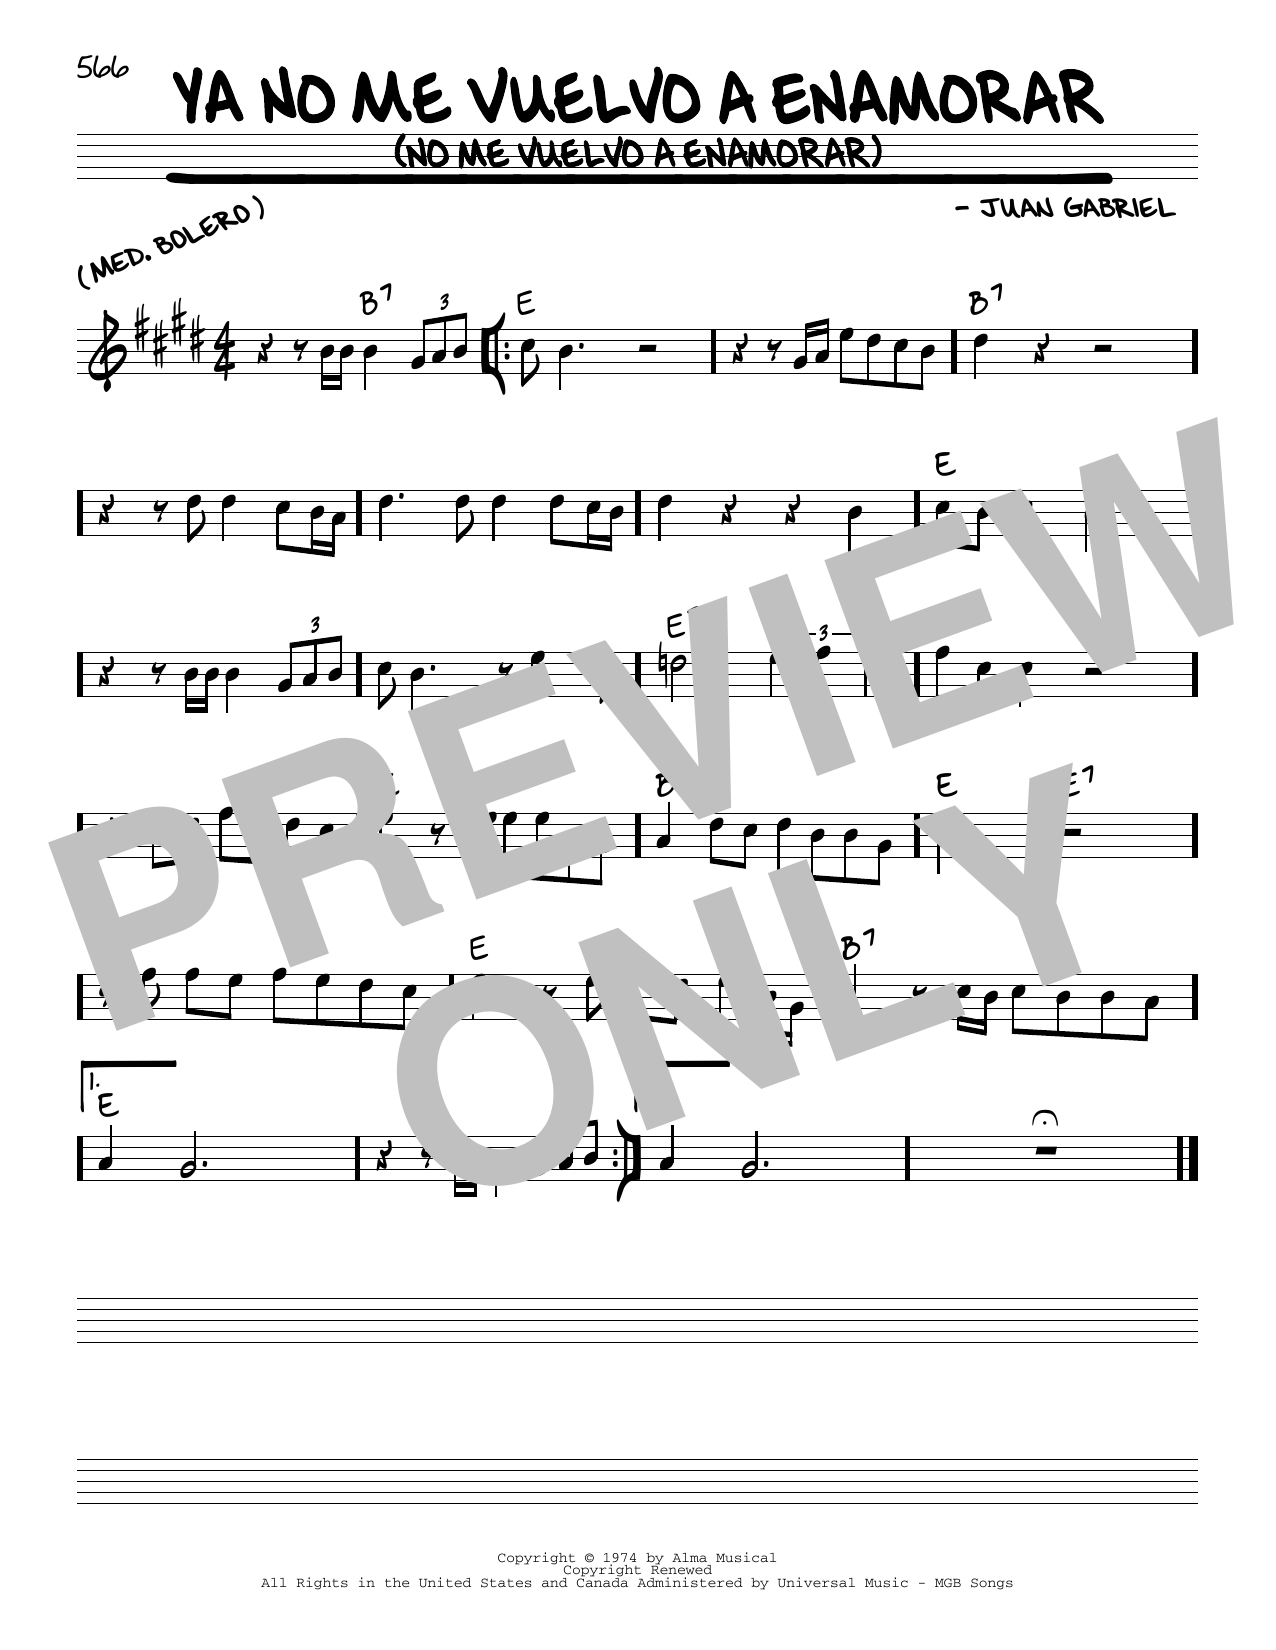 Juan Gabriel Ya no me vuelvo a enamorar (No me vuelvo a enamorar) Sheet Music Notes & Chords for Real Book – Melody & Chords - Download or Print PDF